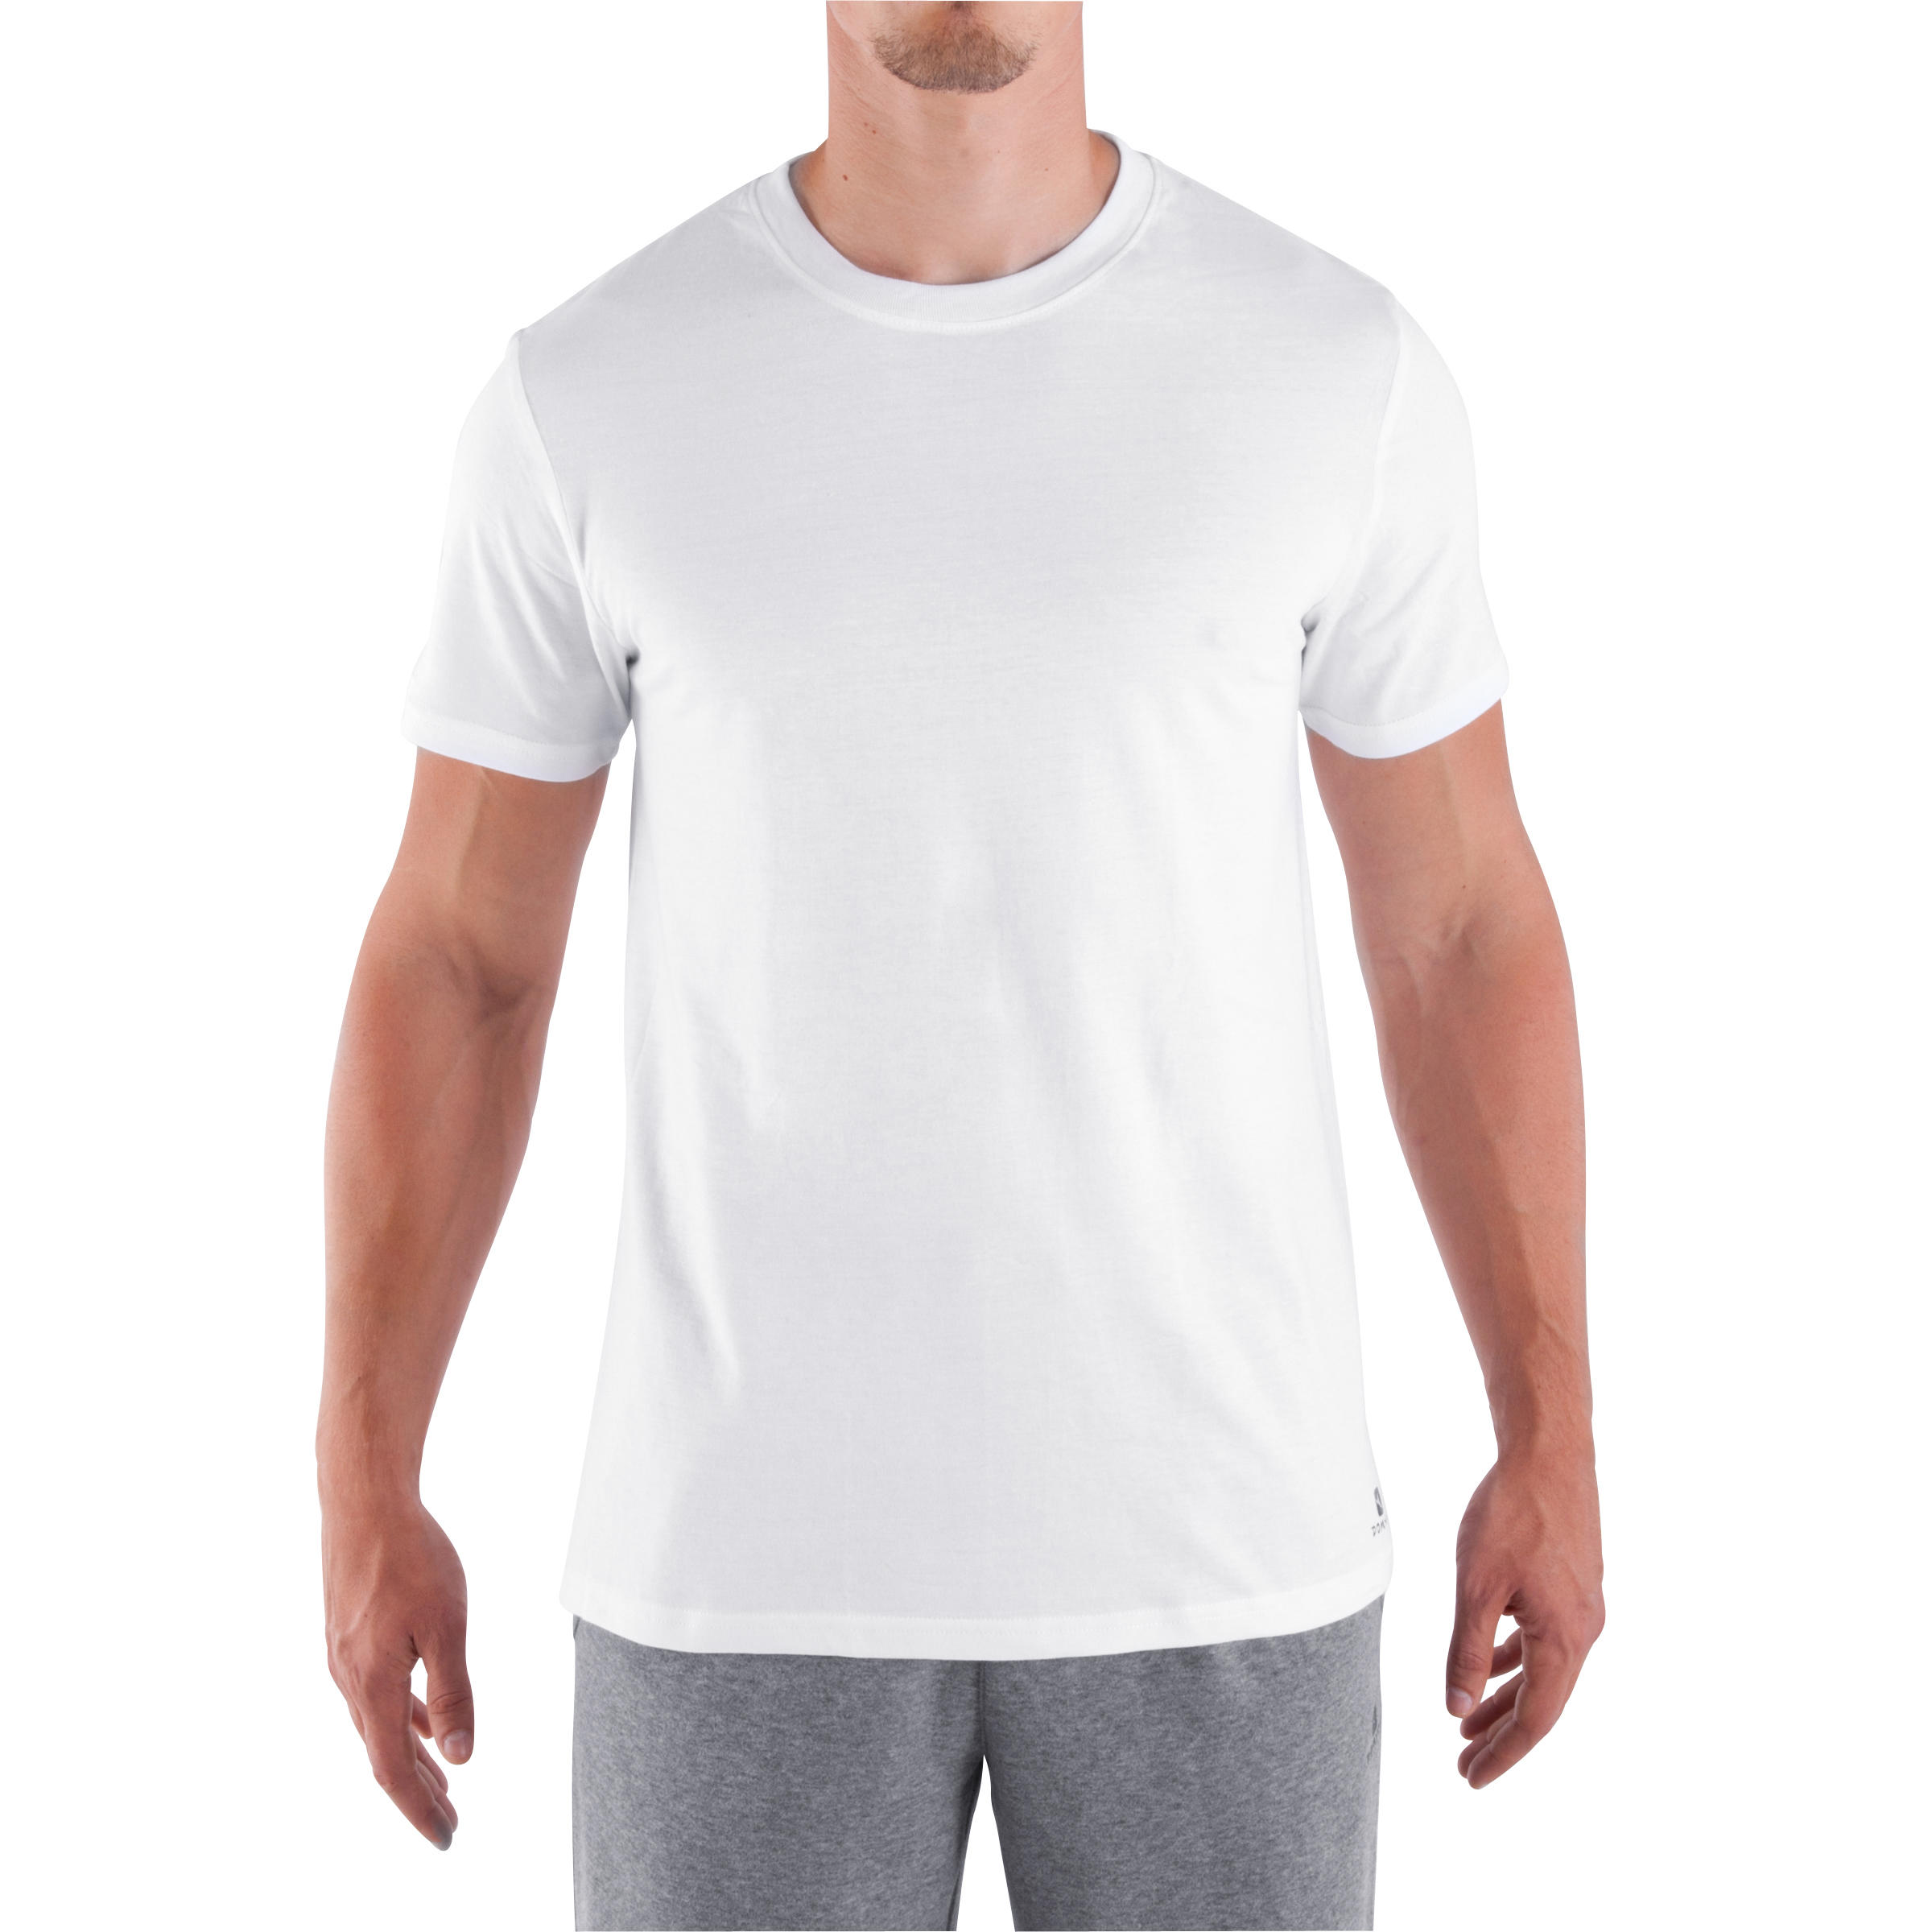 decathlon t-shirts